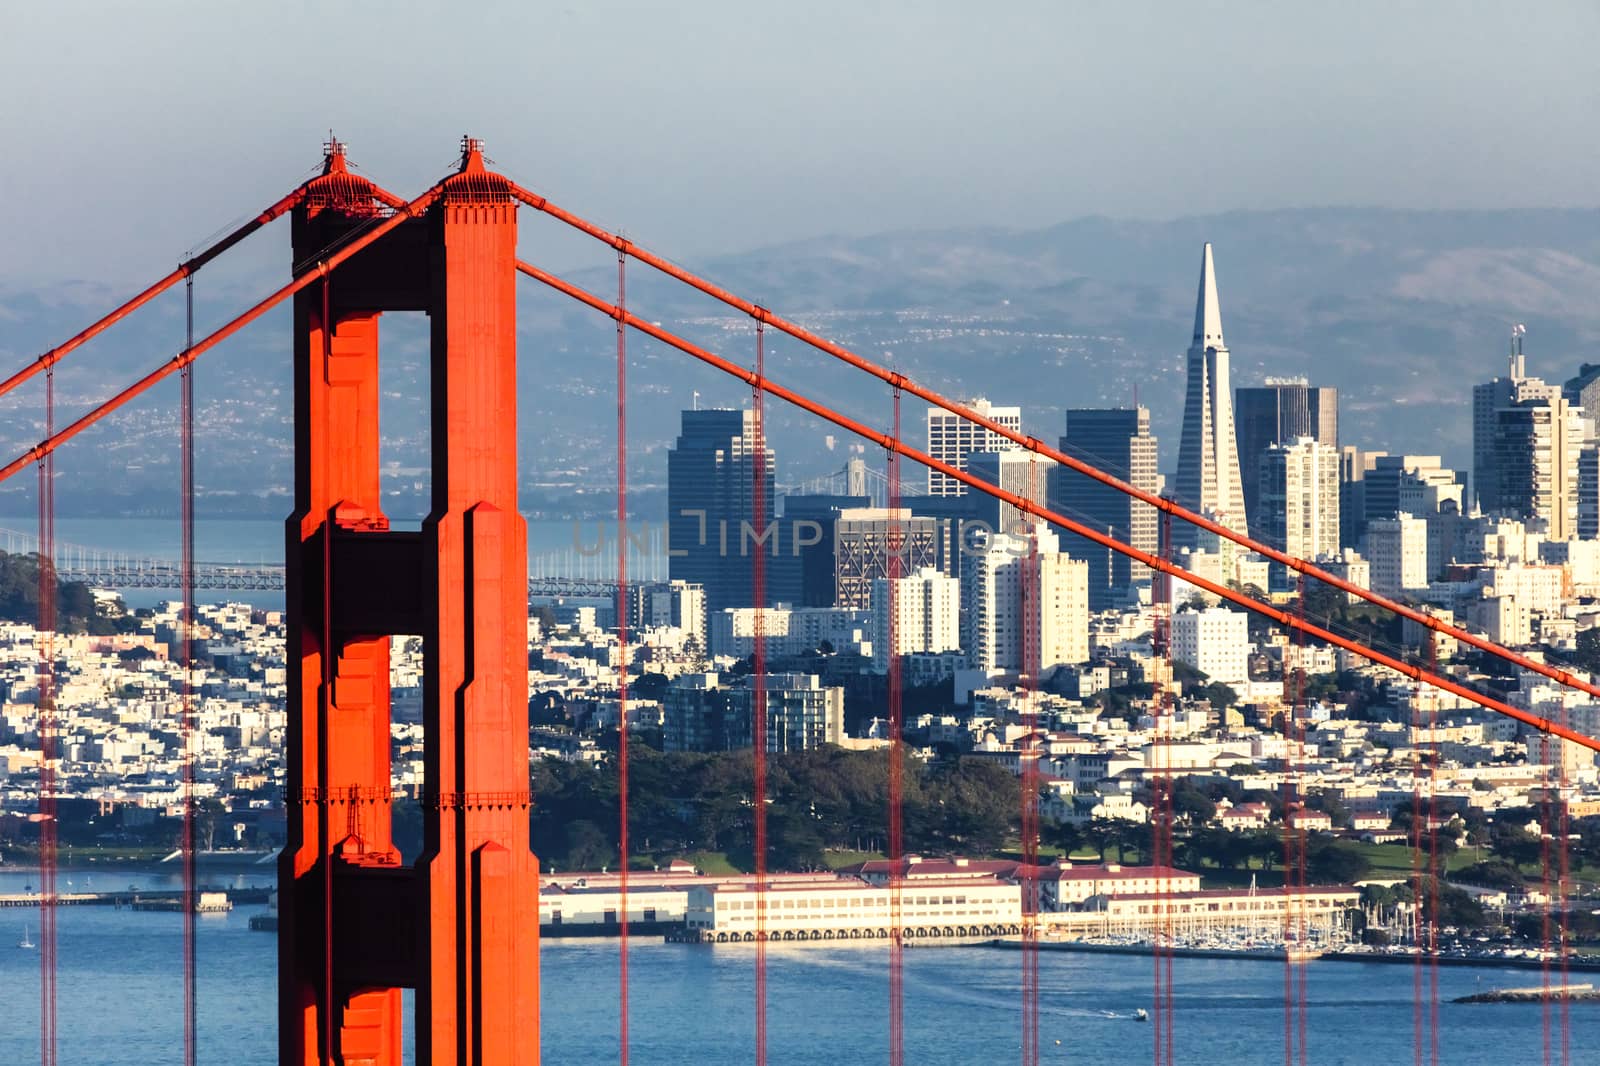 San Francisco from San Francisco Headlands and Golden Gate bridge